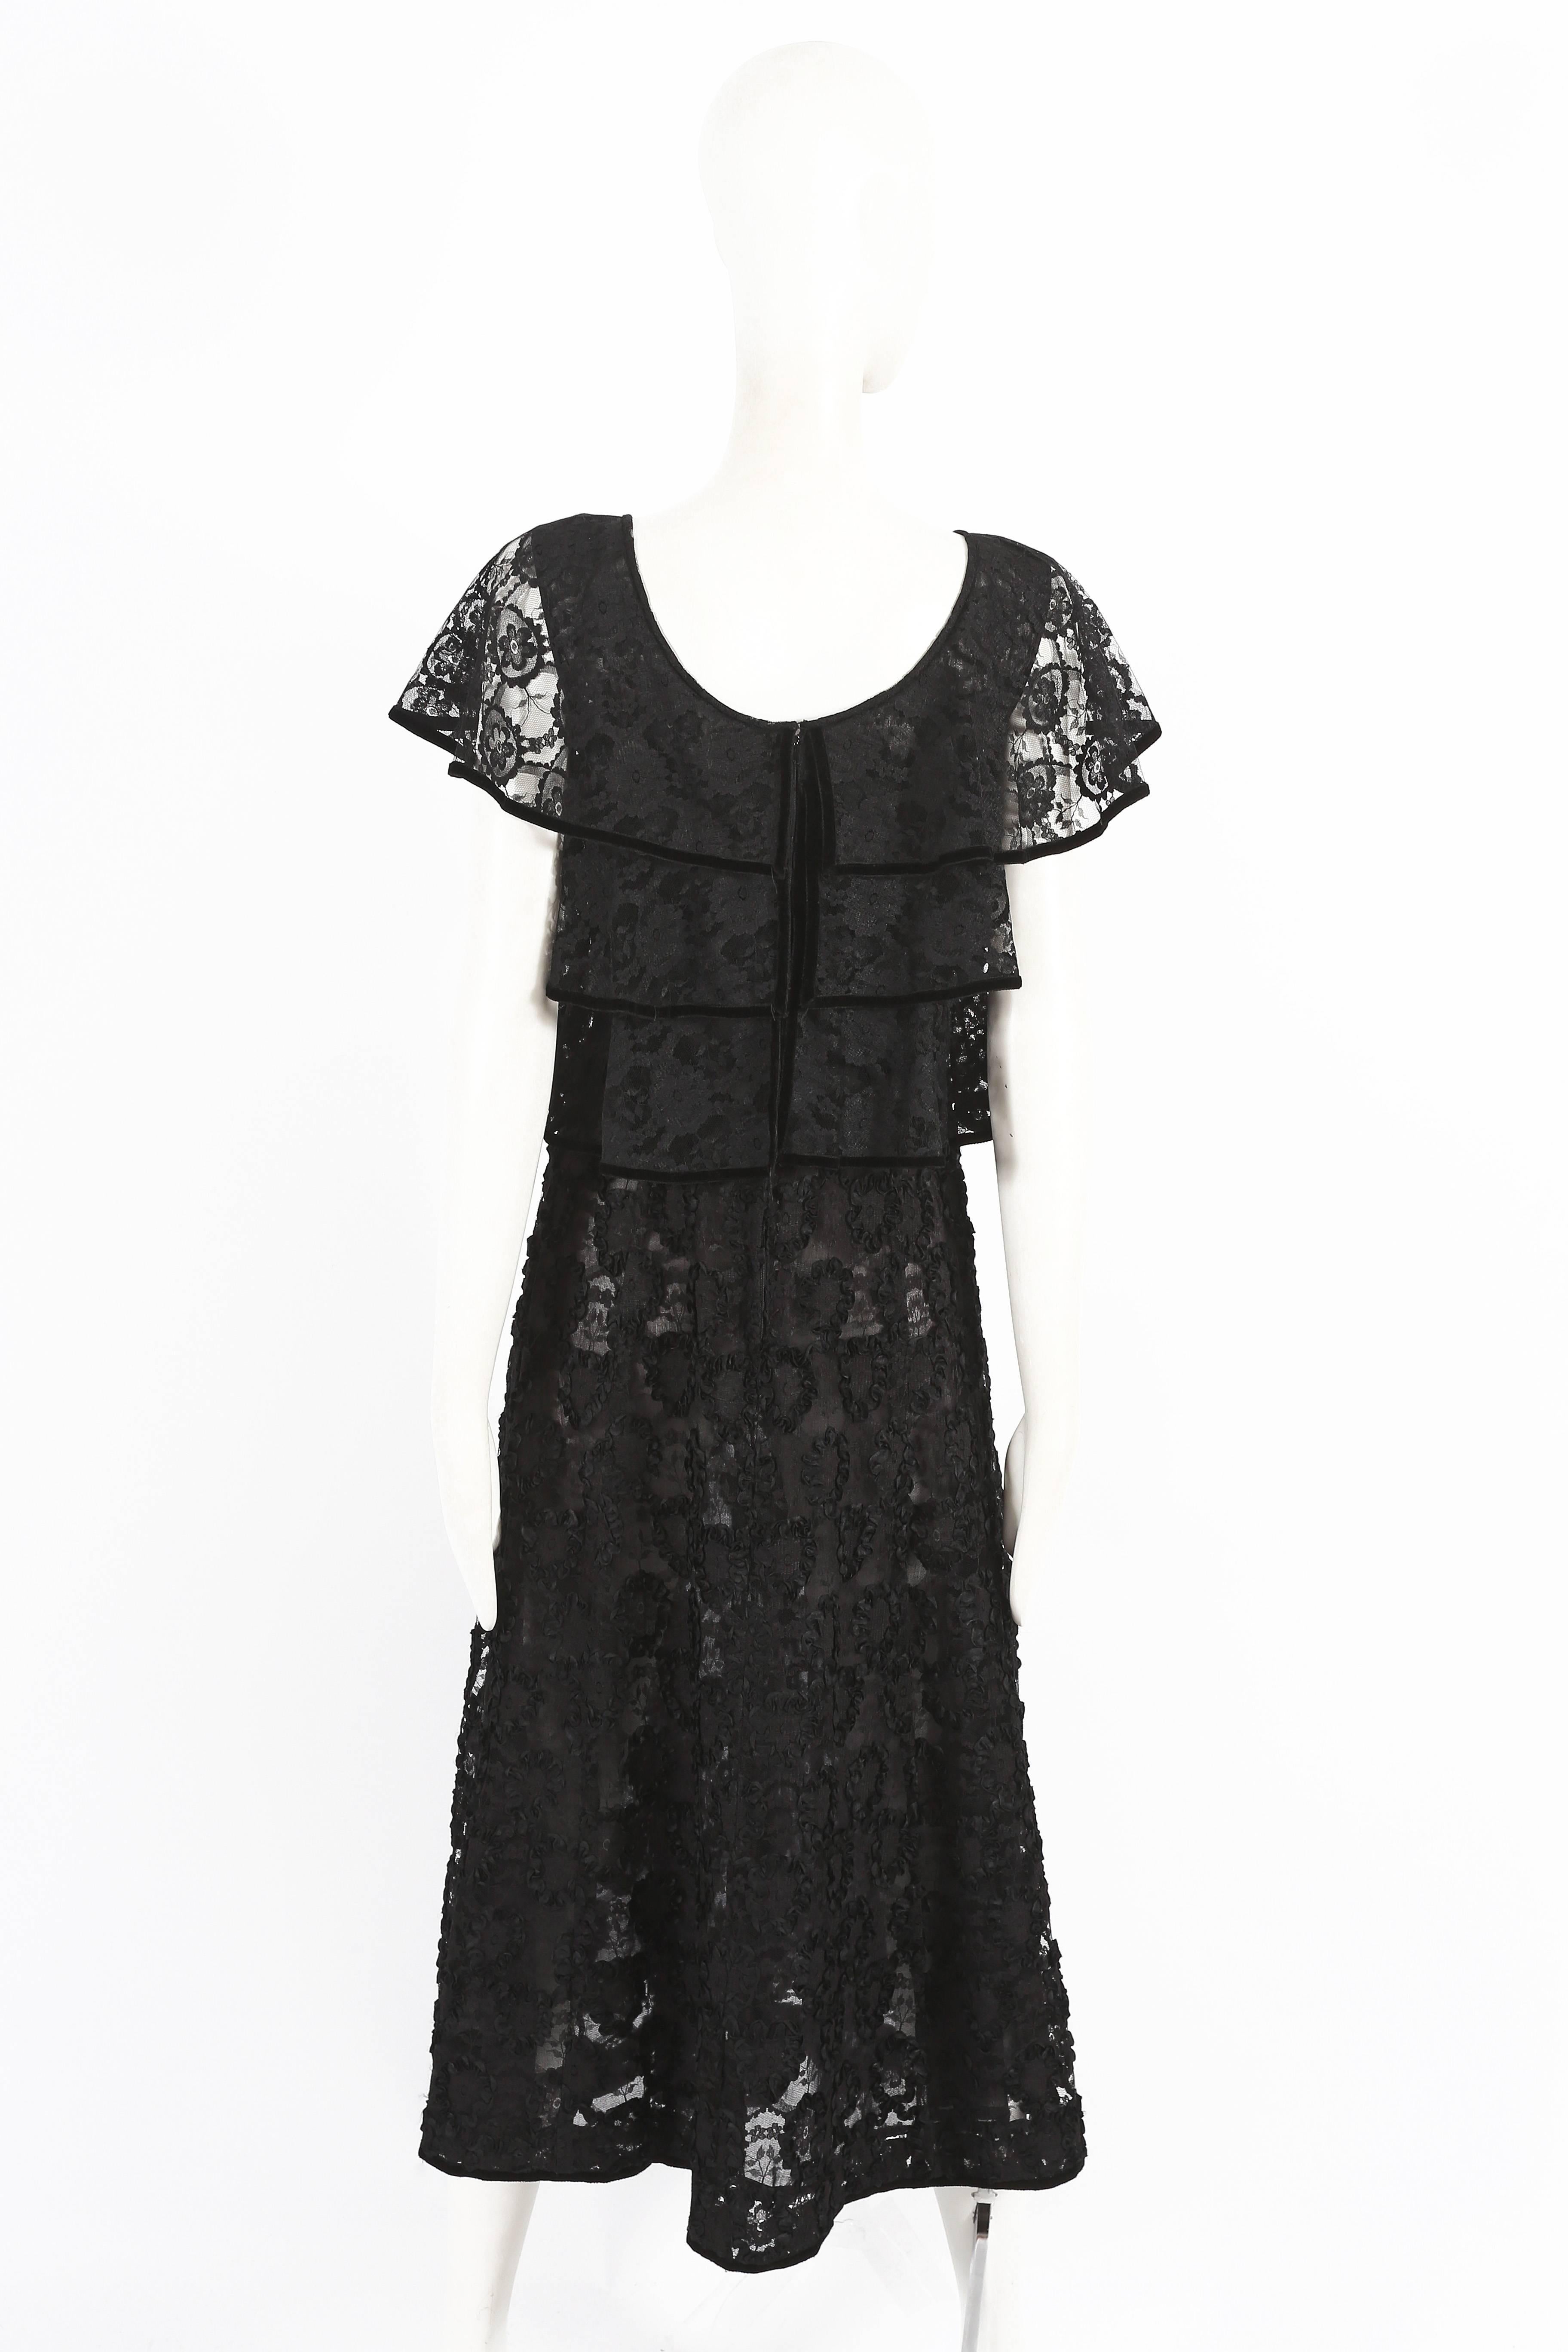 Women's Thea Porter velvet trimmed lace evening dress, circa late 1960s